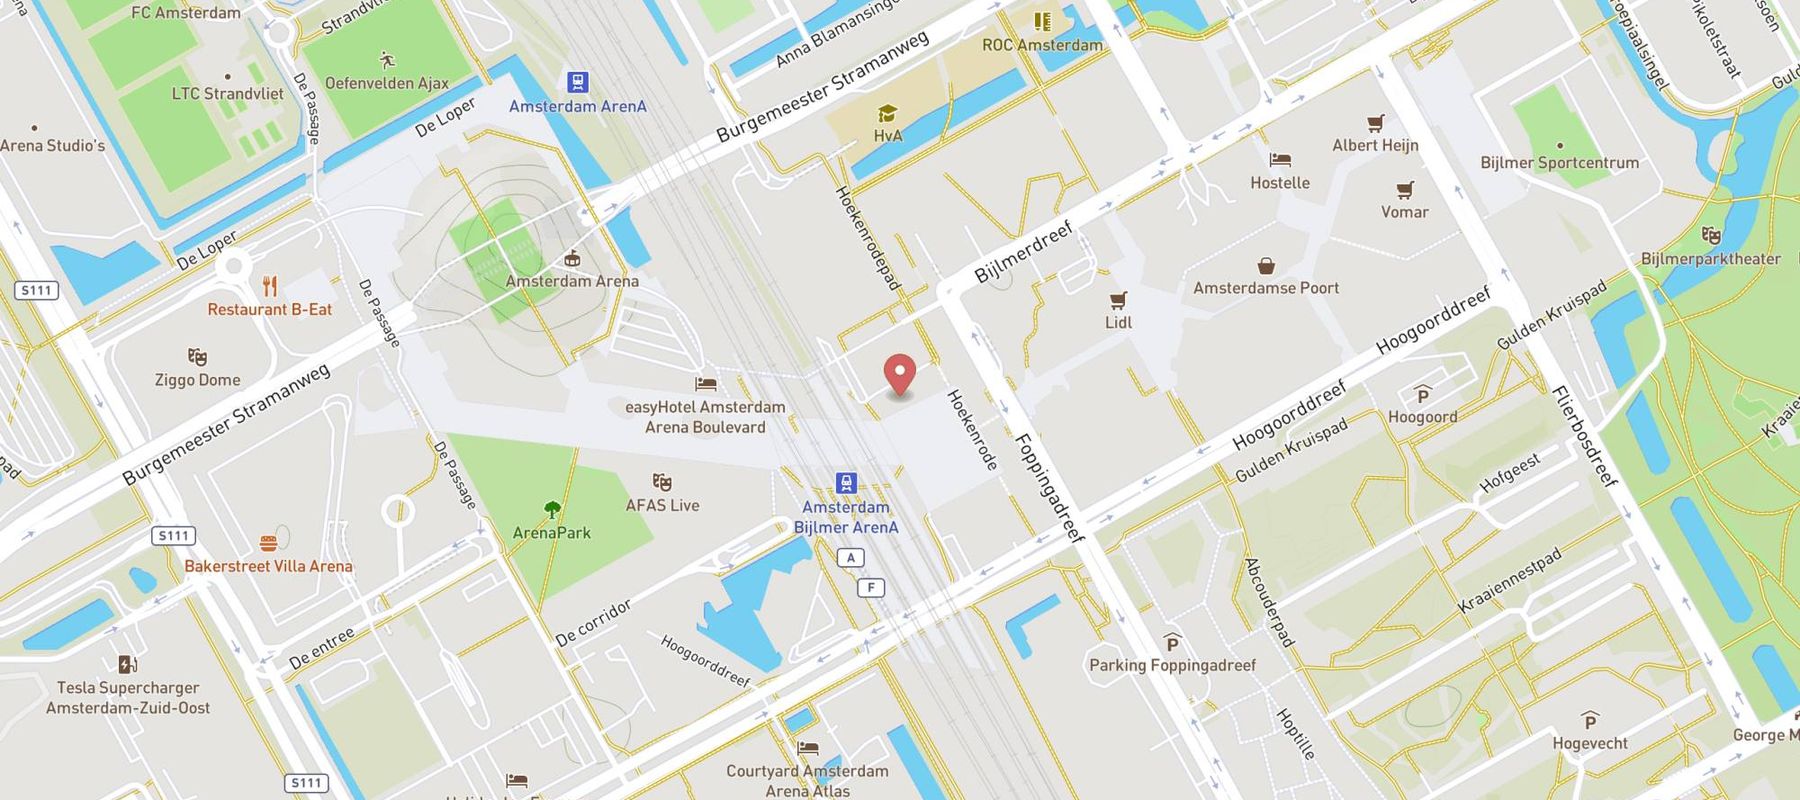 Hampton by Hilton Amsterdam / Arena Boulevard map